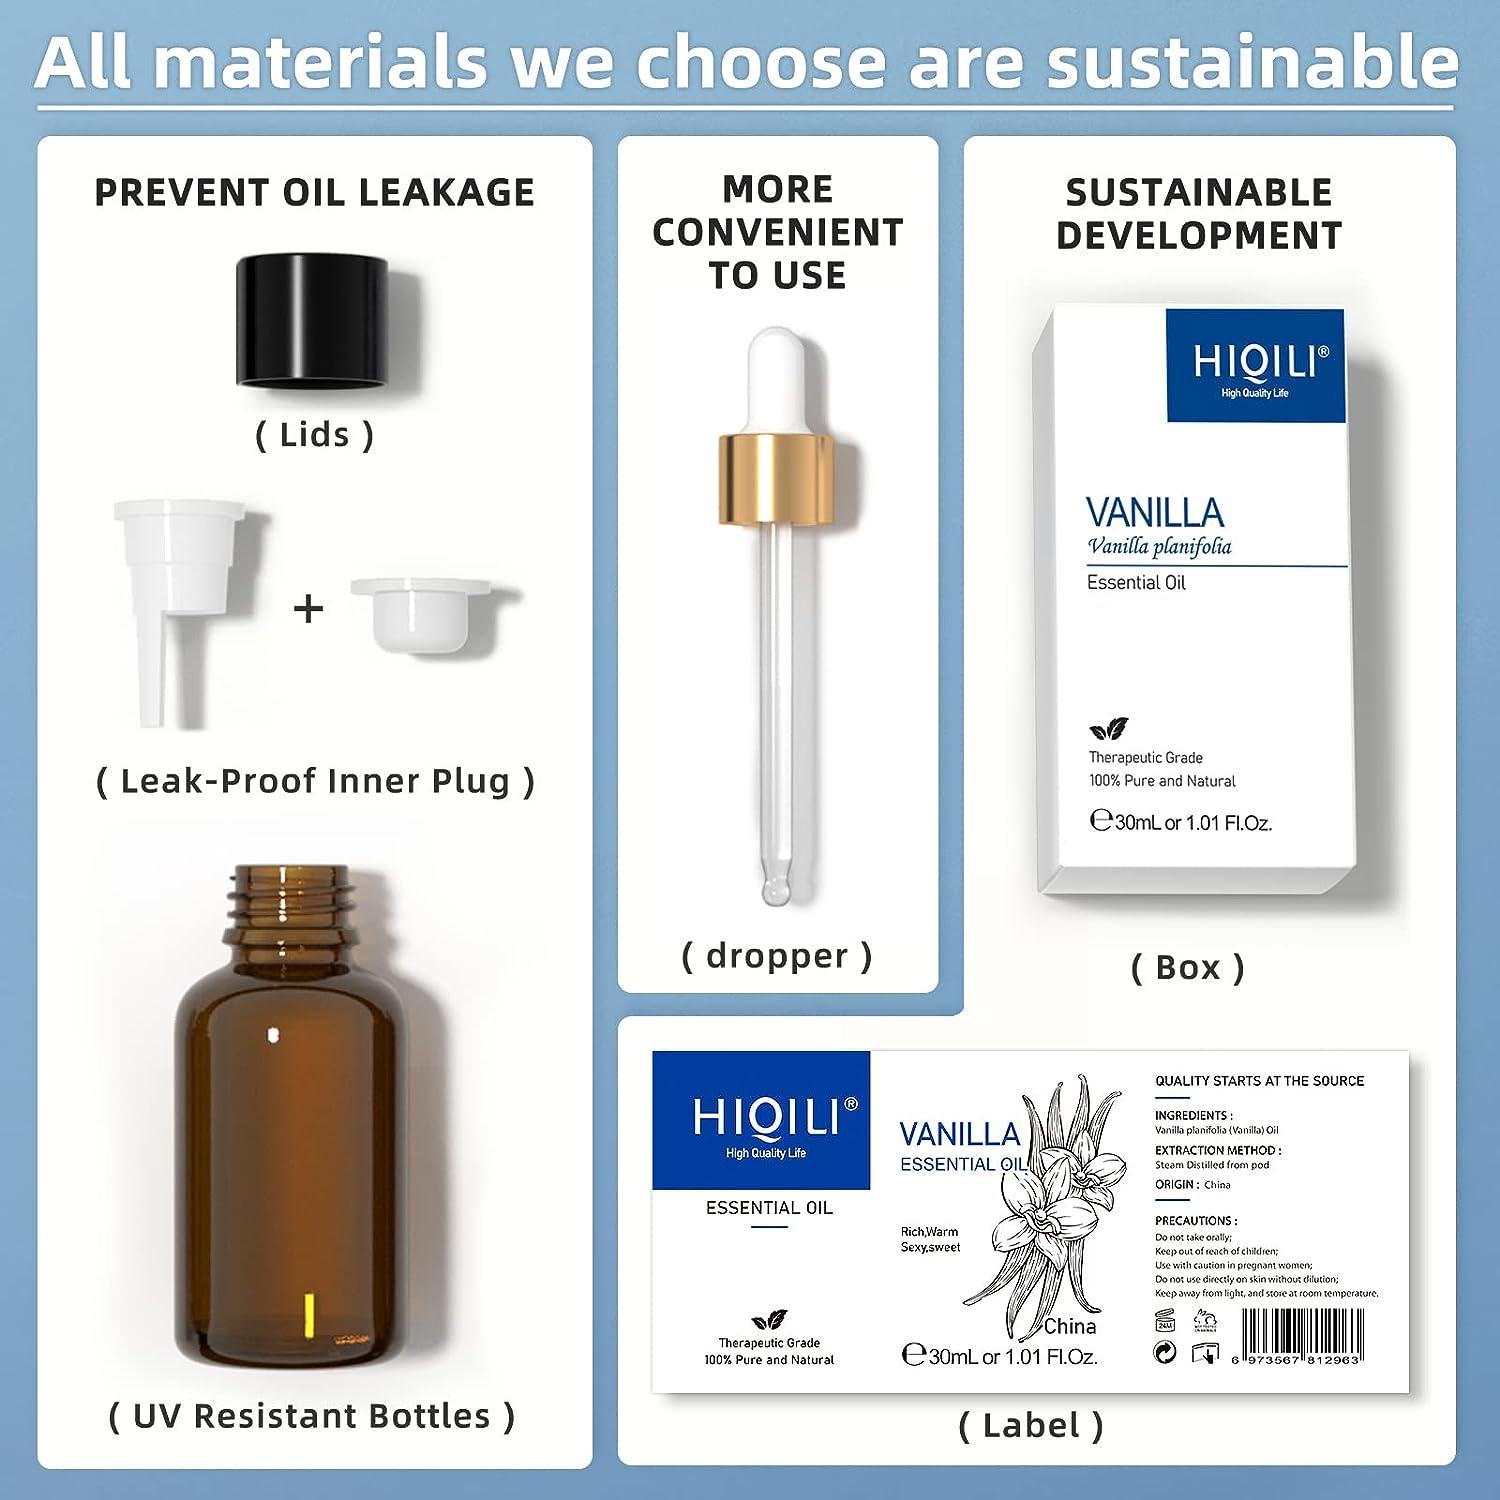 HIQILI 1pc 1.01 Fl Oz/30 ML Vanilla Essential Oil For Diffuser Humidifier  Soap Candle Making